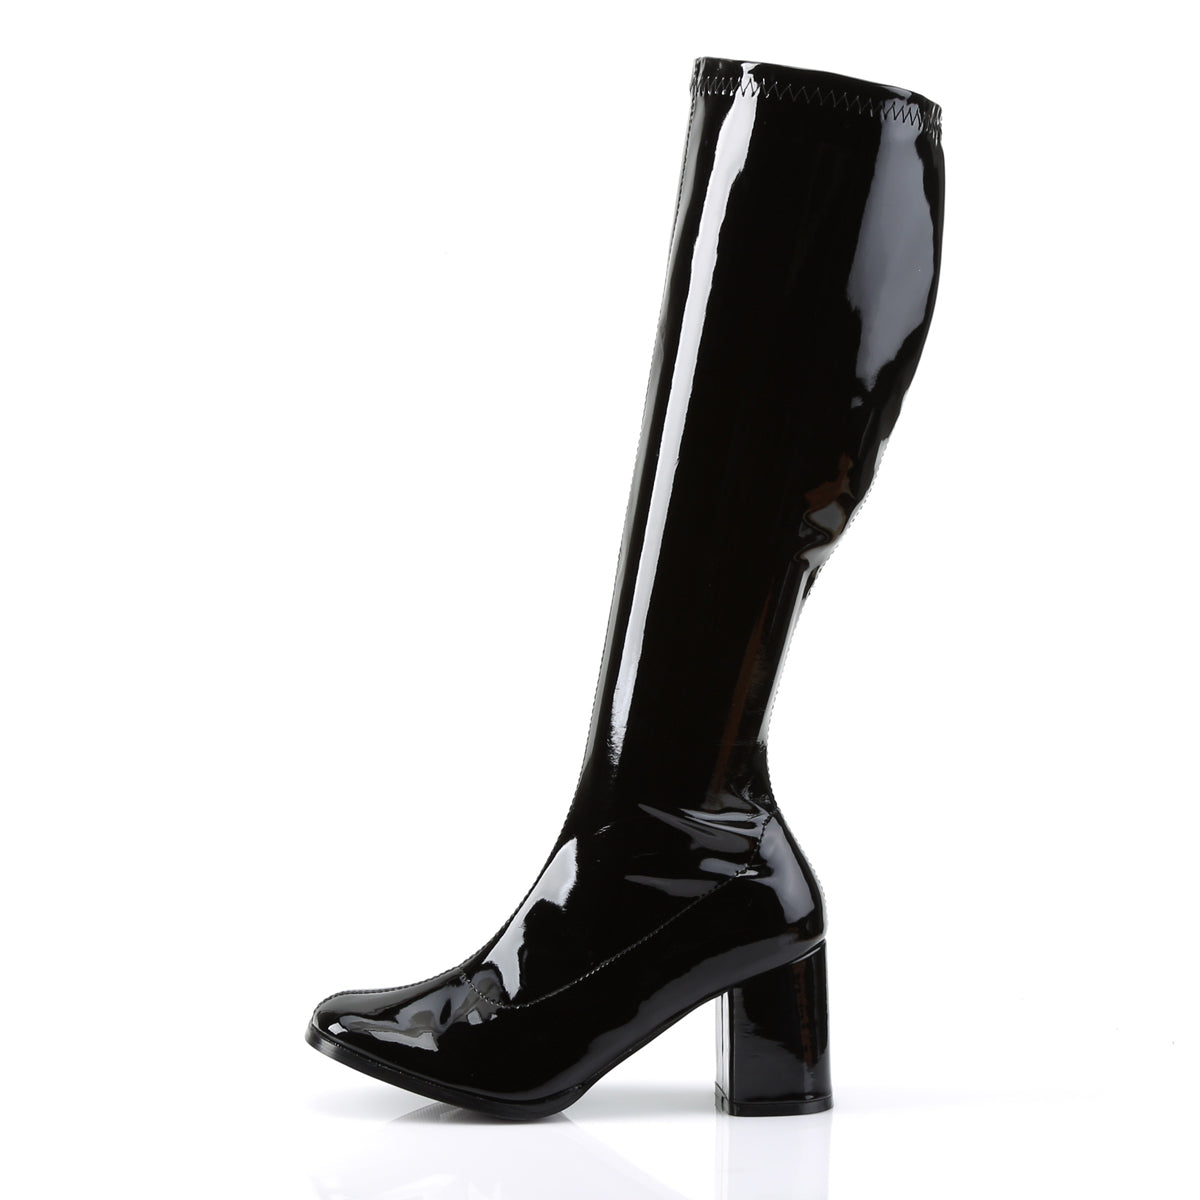 GOGO-300 Funtasma Fantasy Black Stretch Patent Women's Boots [Retro Knee High Boots]